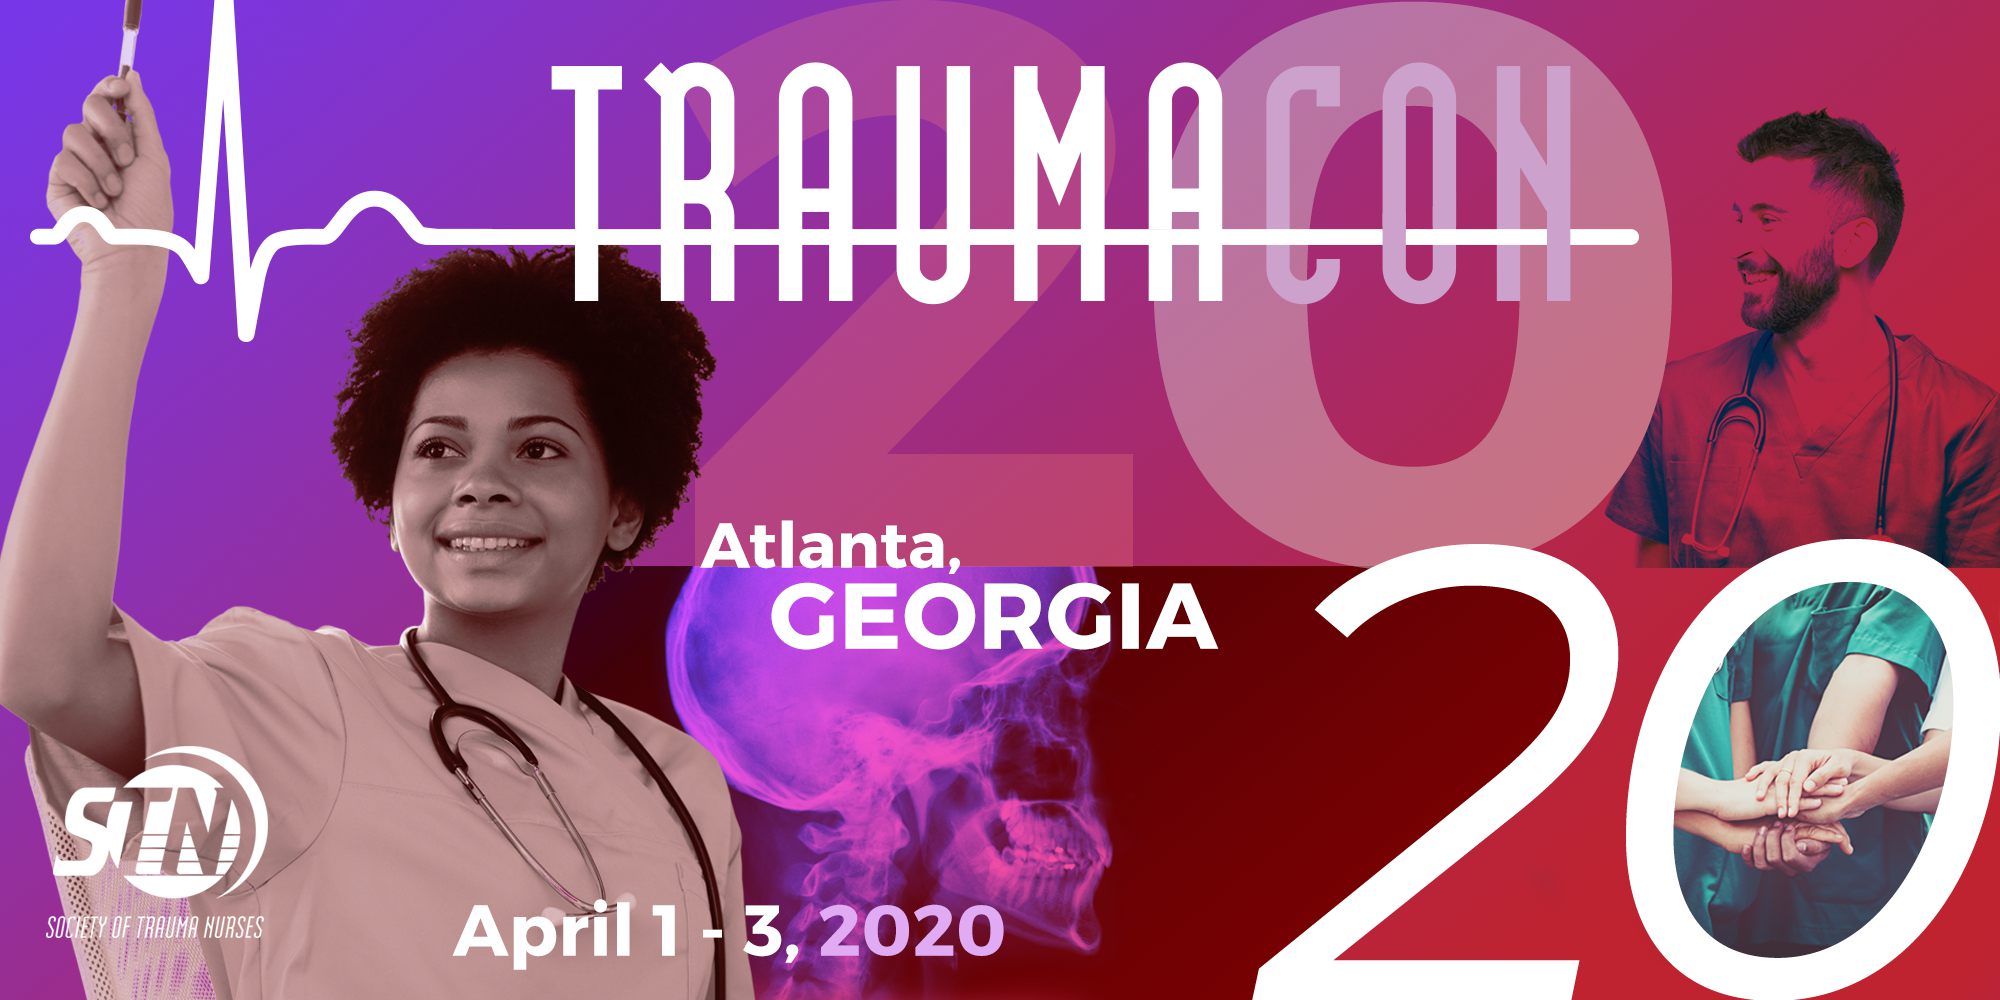 TraumaCon 2020 - 23rd Annual Conference of the Society of Trauma Nurses
